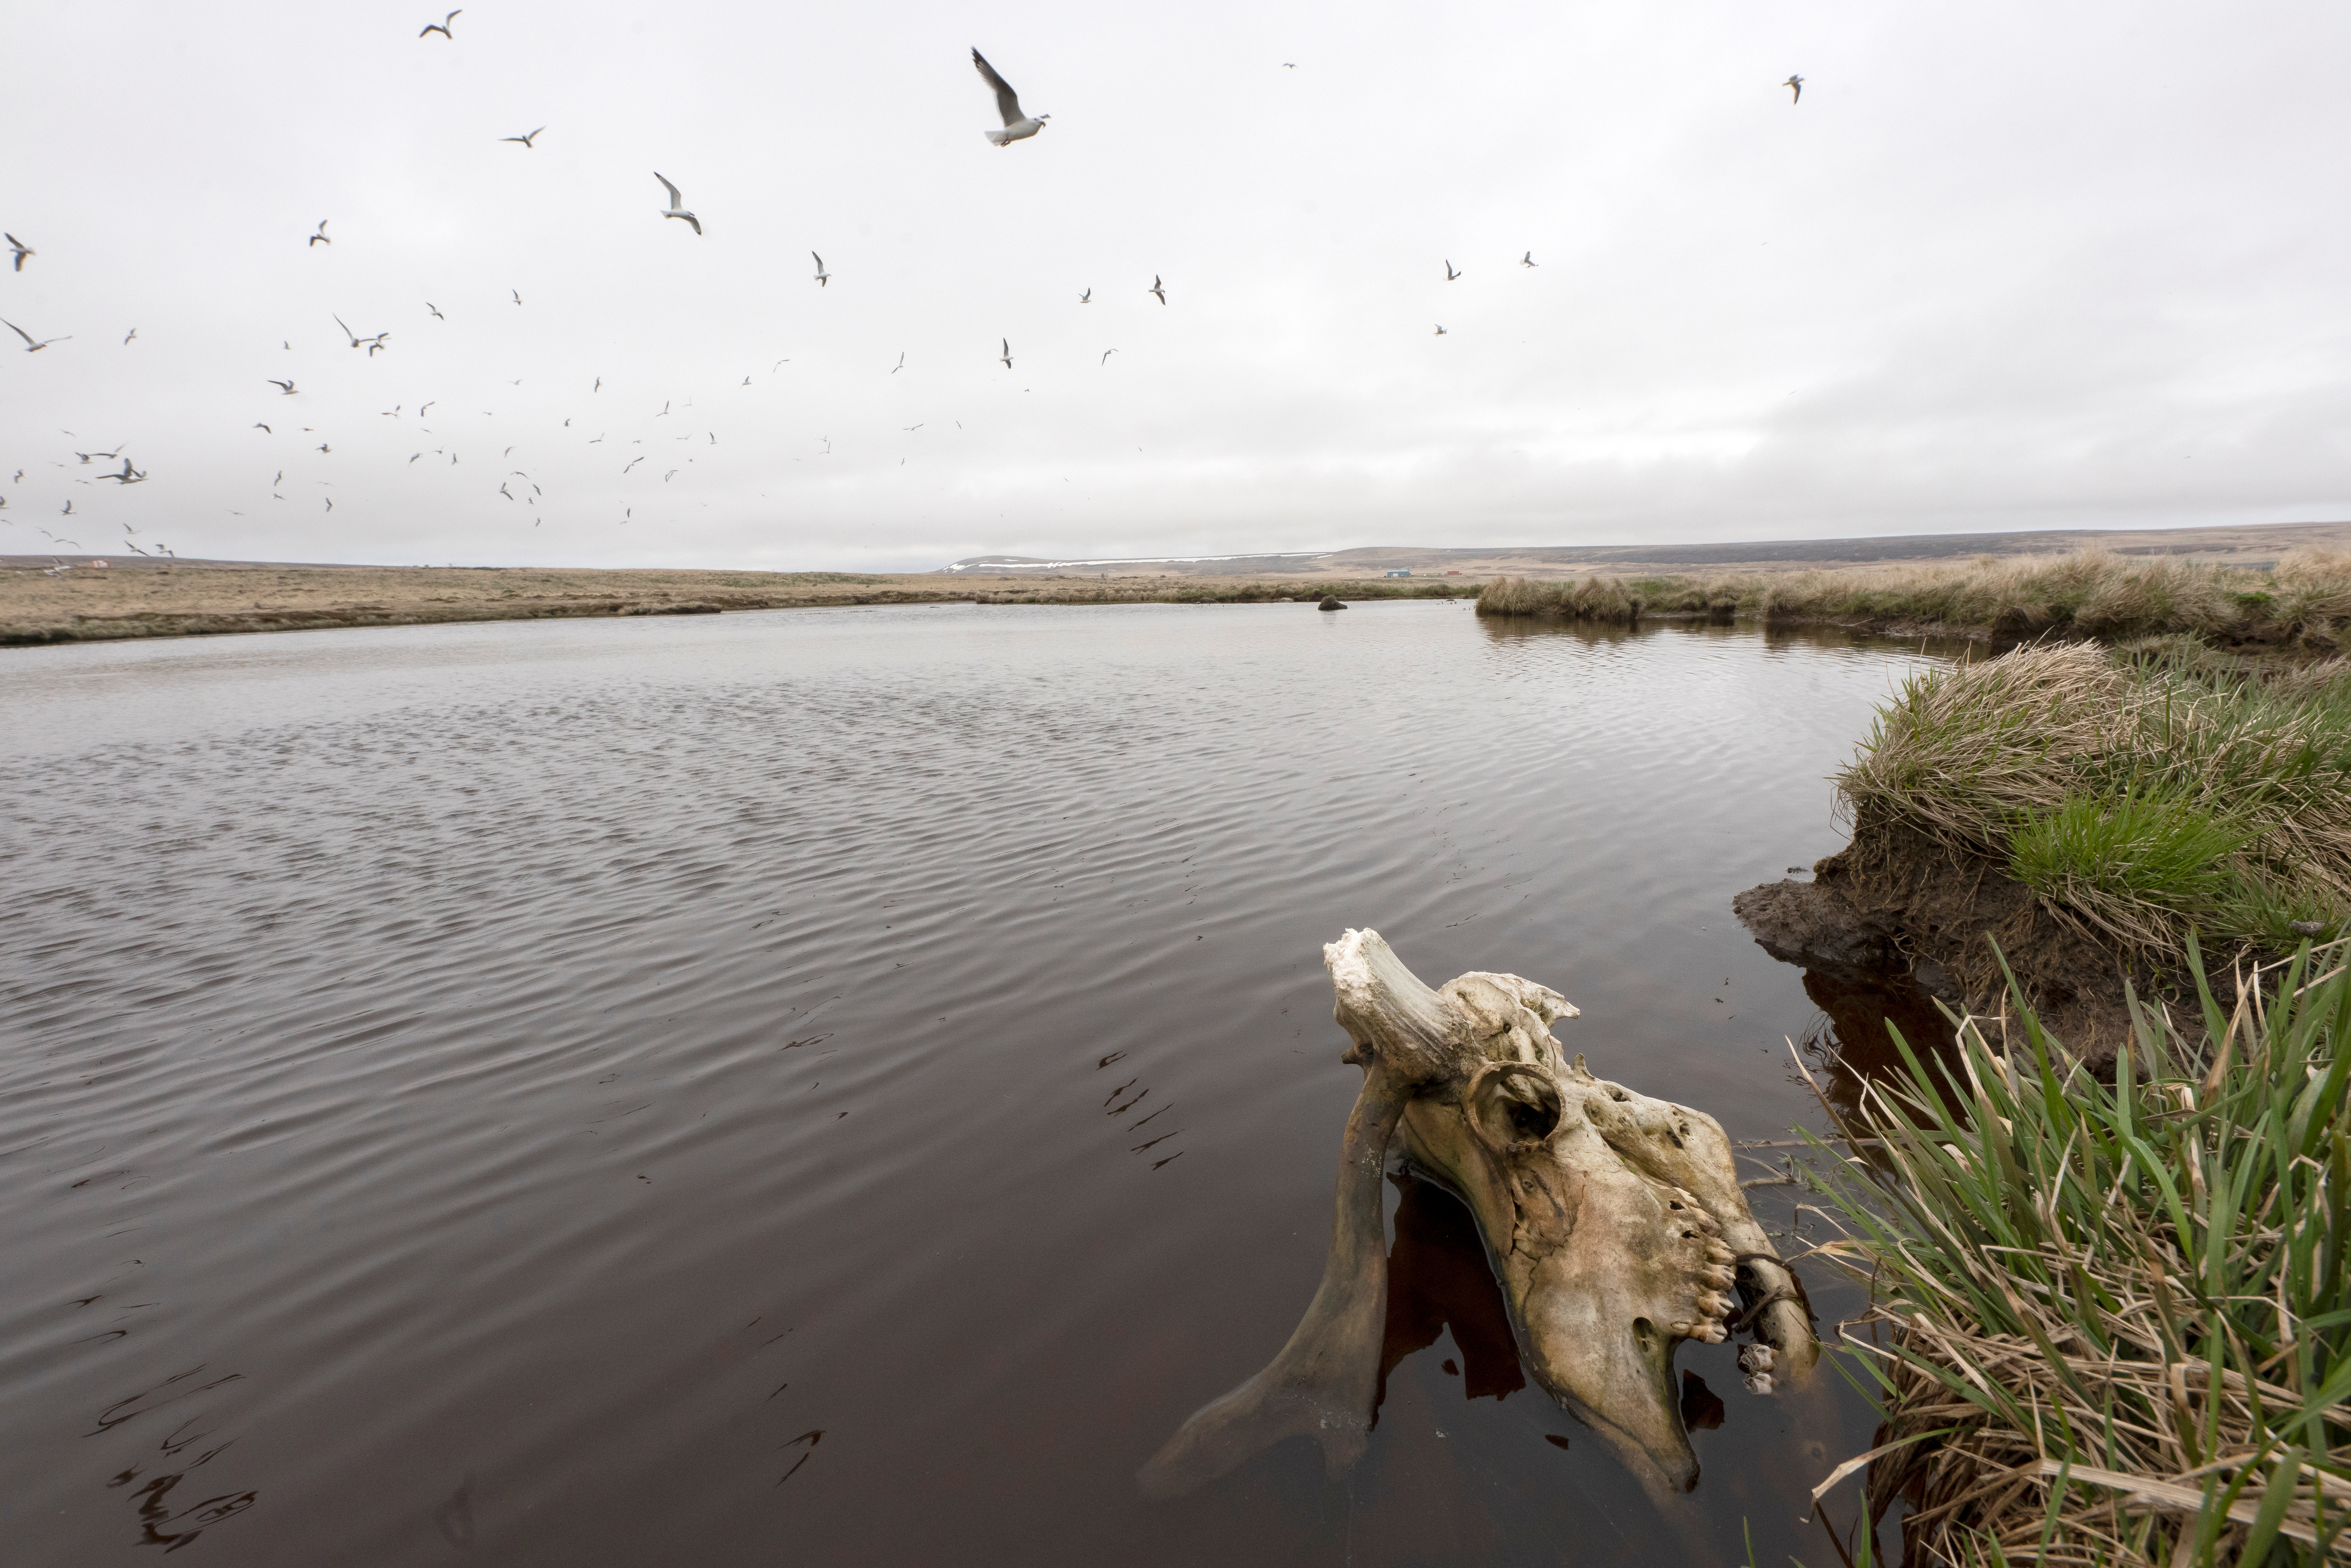 On an Alaska island, an indigenous mayor struggles to save wildlife